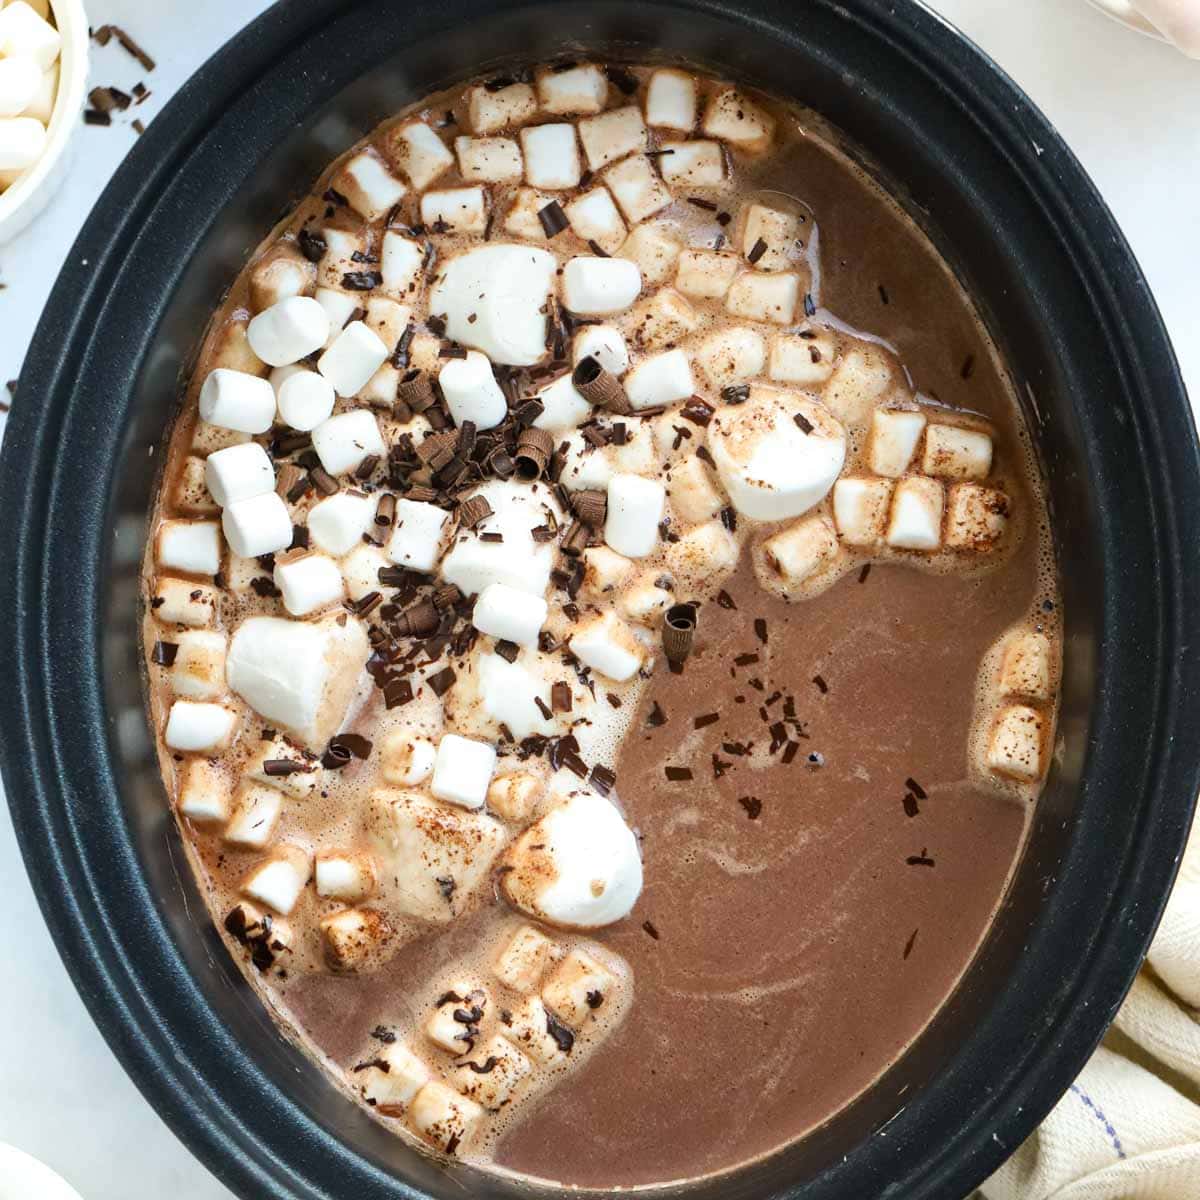 https://www.tamingtwins.com/wp-content/uploads/2022/10/slow-cooker-hot-chocolate-6.jpg